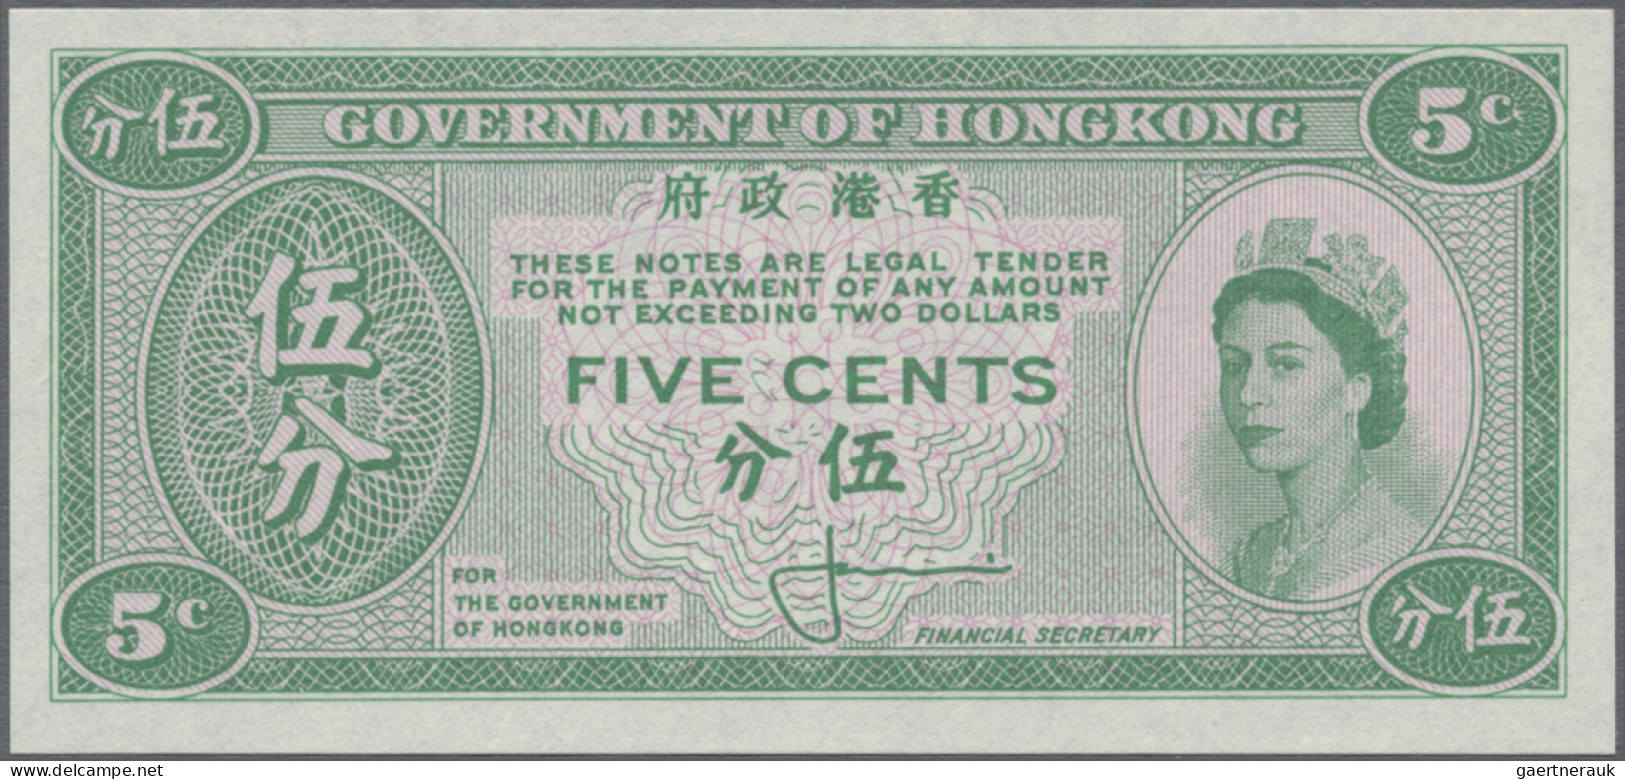 Hong Kong: Government of Hong Kong, very nice group of 9 small size notes, serie